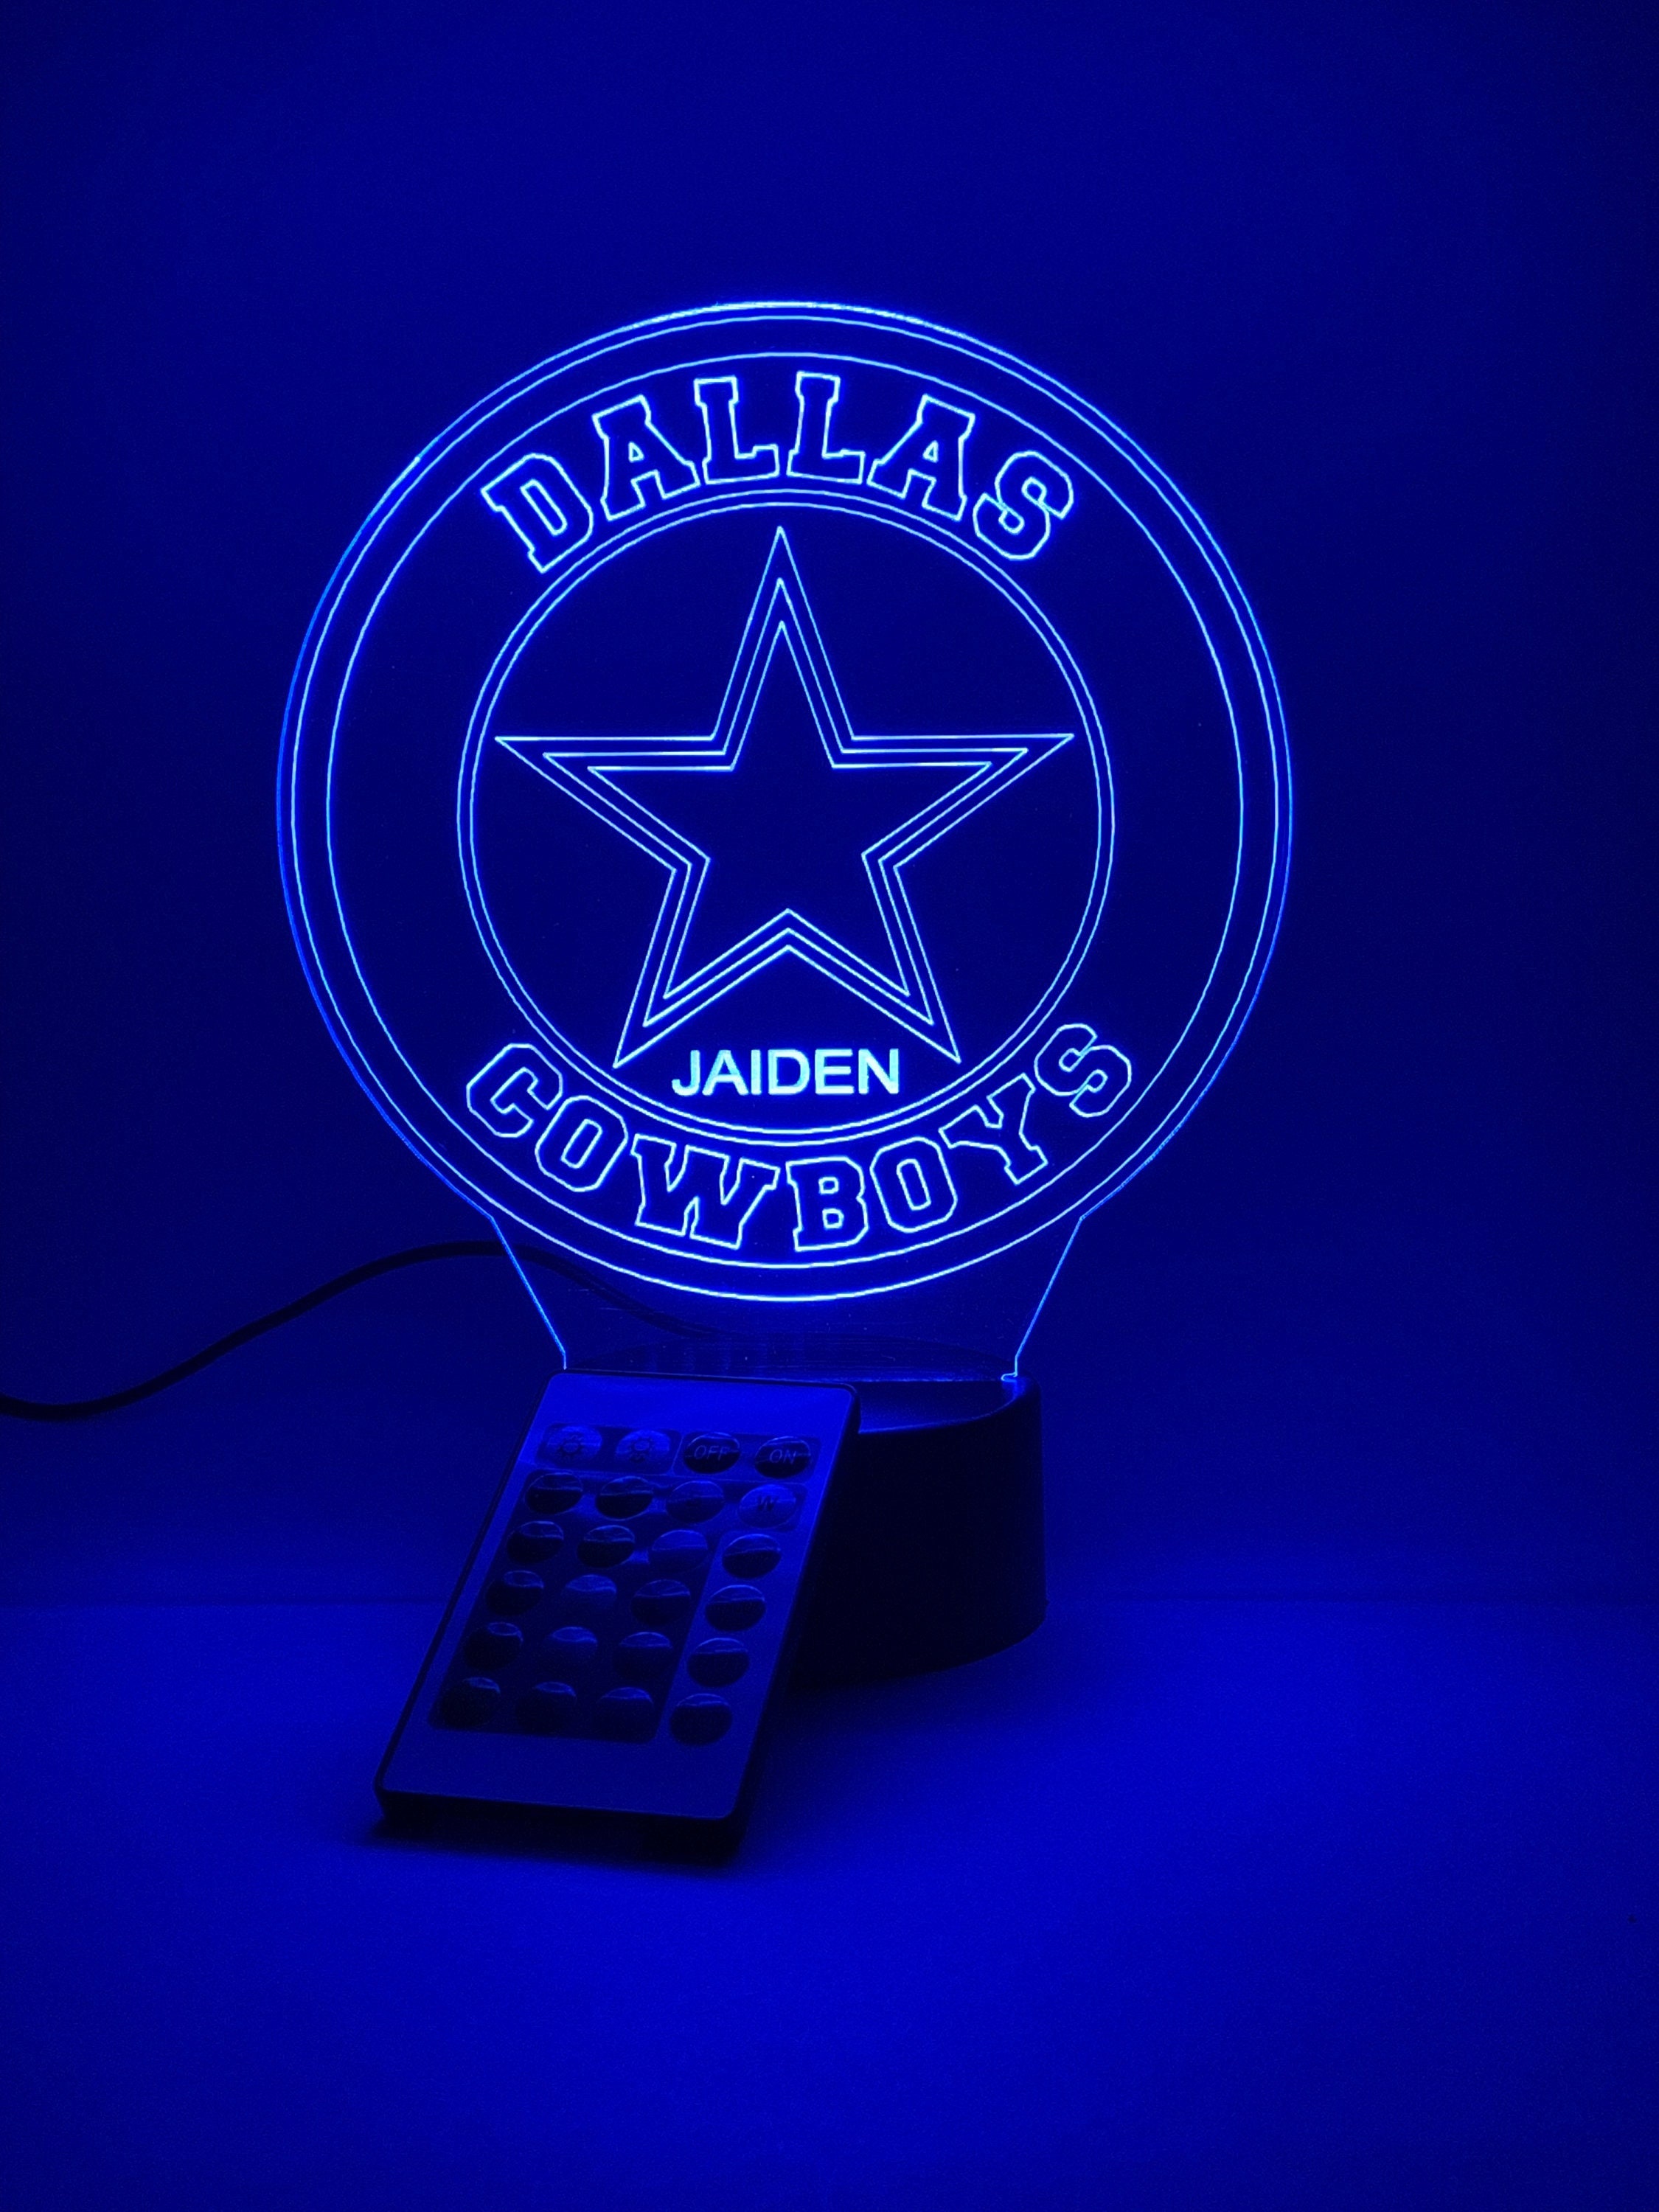 Limited edition Personalized Dallas Cowboys Jesus 3D Tumbler –